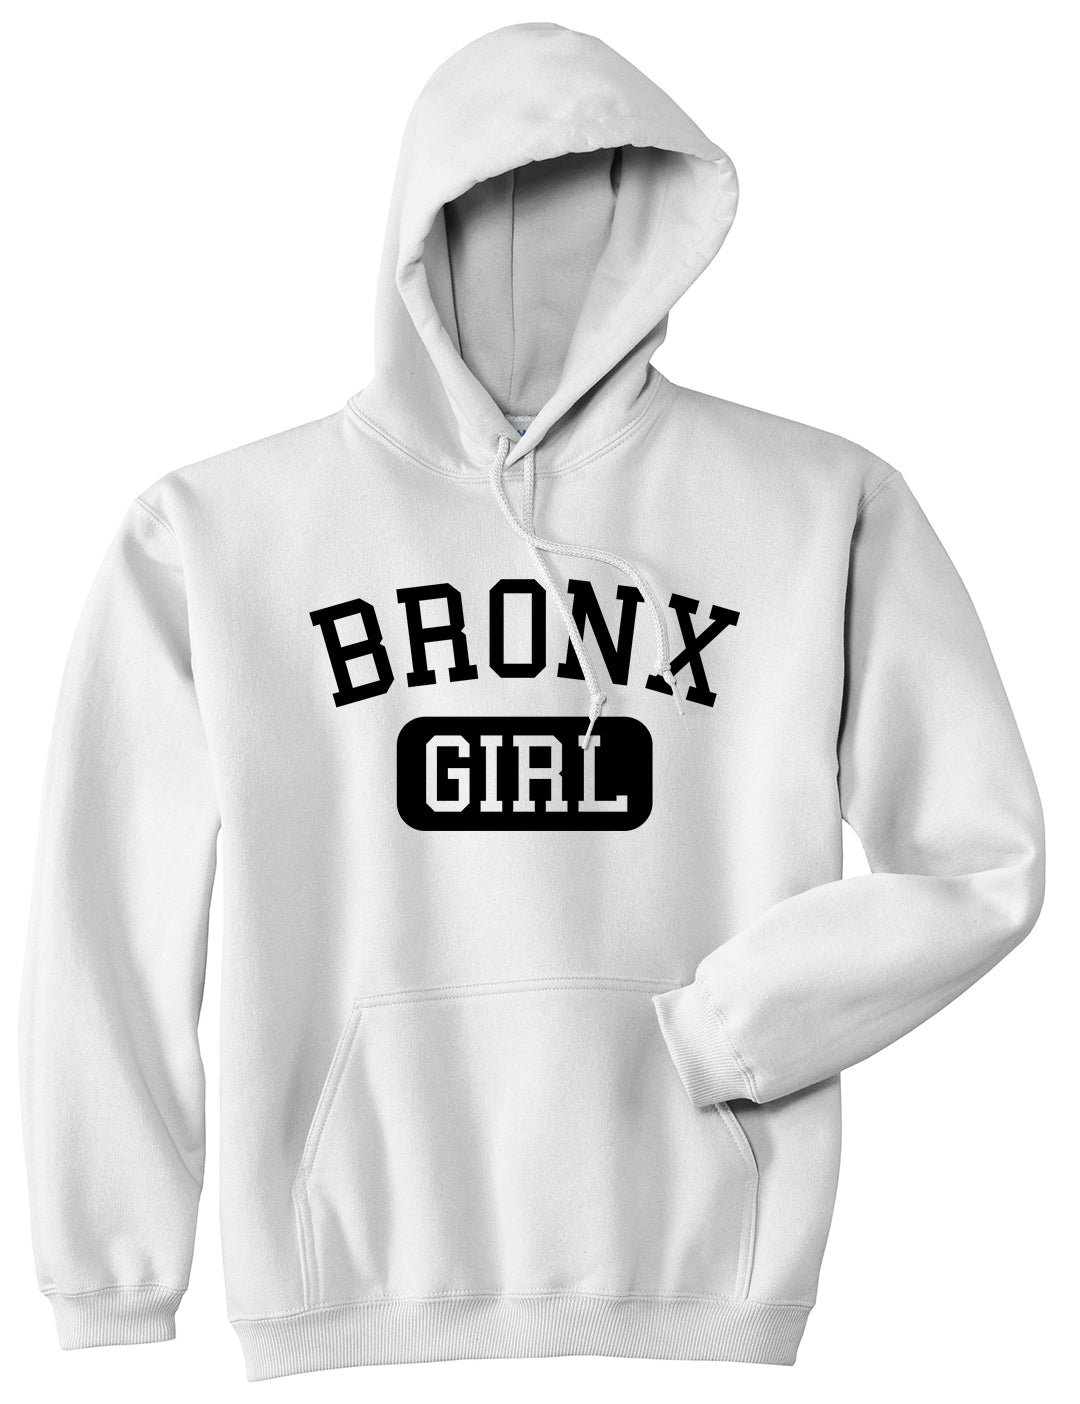 Bronx Girl New York Mens Pullover Hoodie White